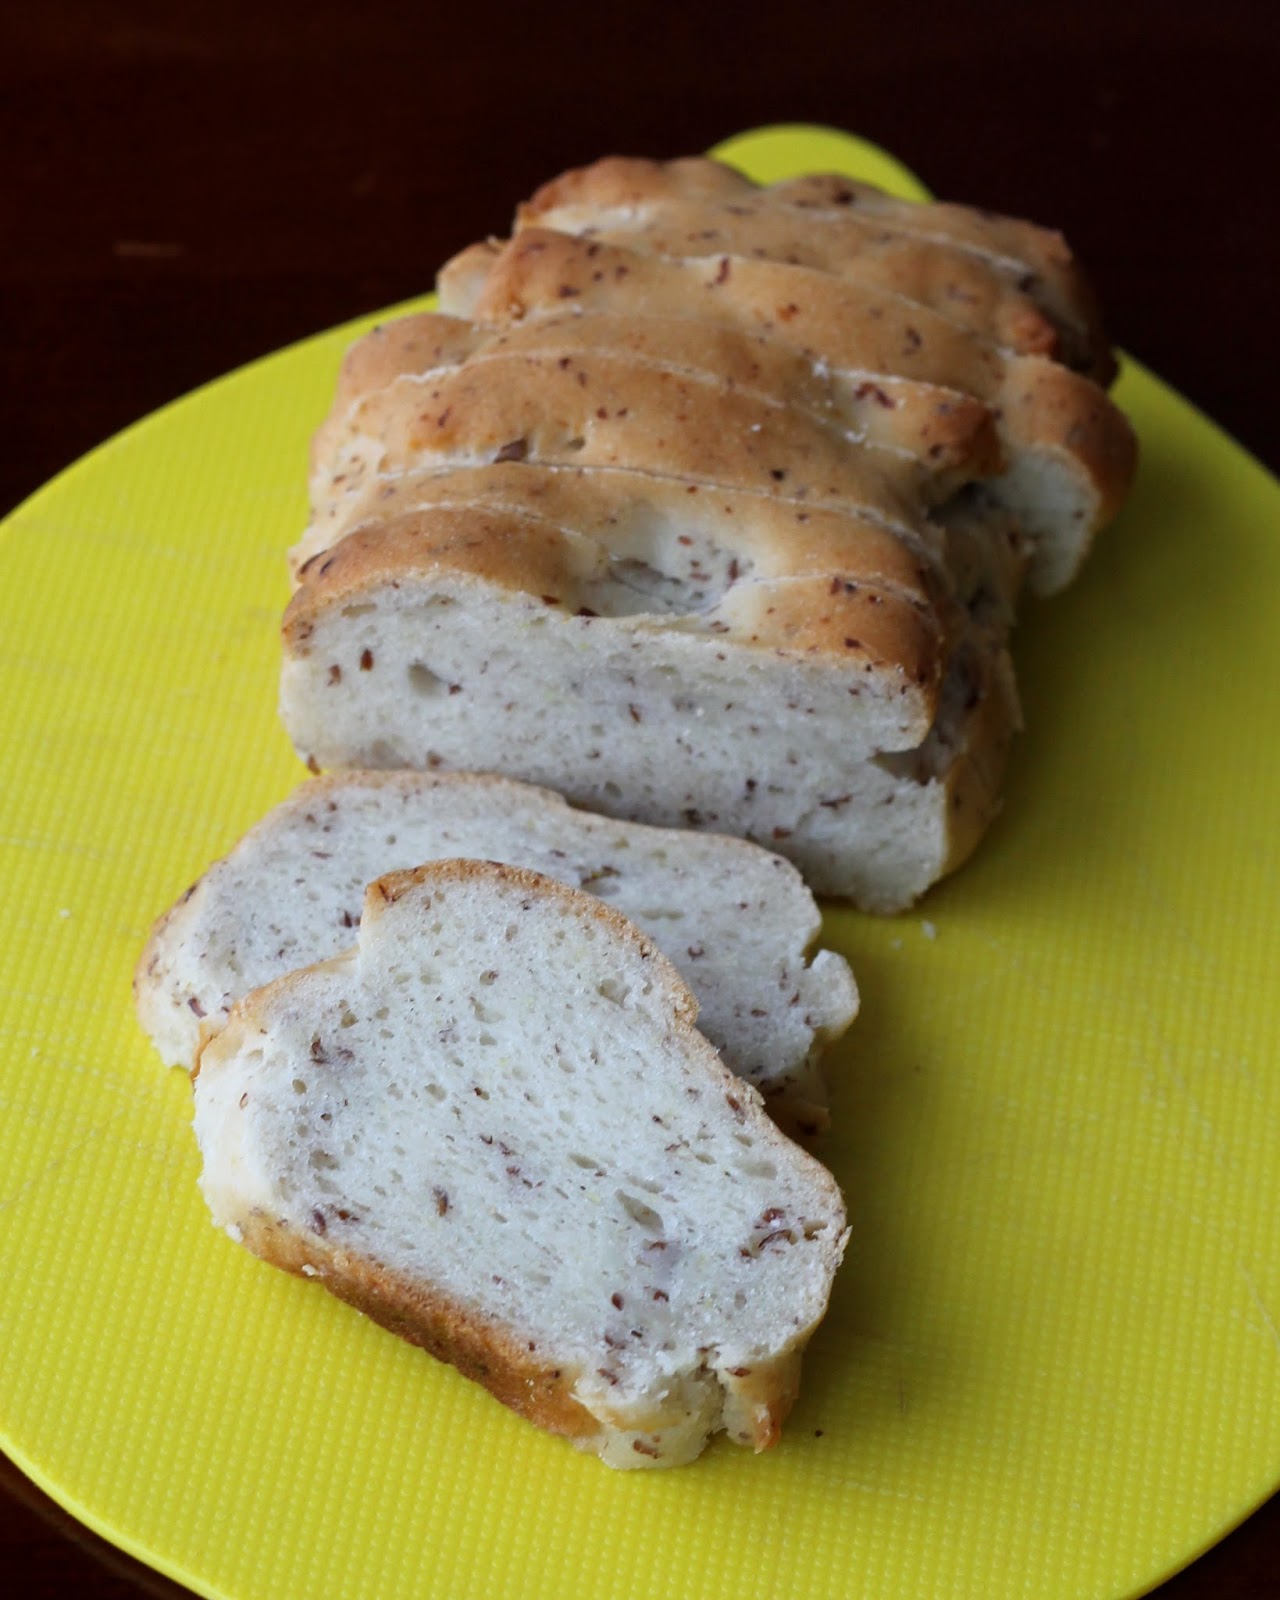 Auntie Bethany - The Best Gluten Free: Gluten Free and Vegan Bagel Bread